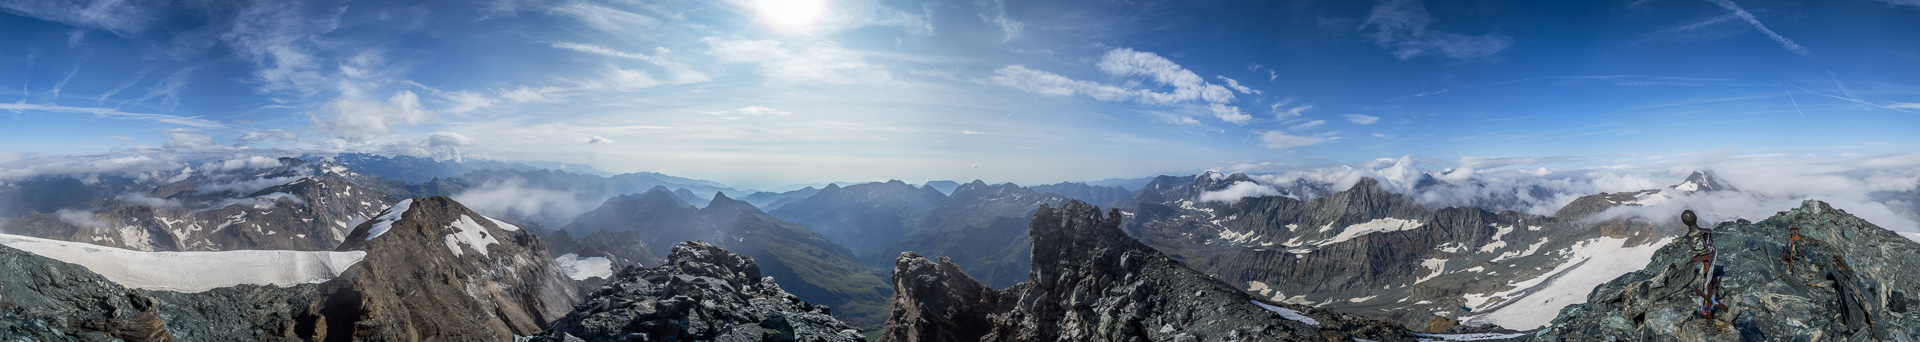 Leicht bewölktes Gipfelpanorama mit Paradiso und Vanoise